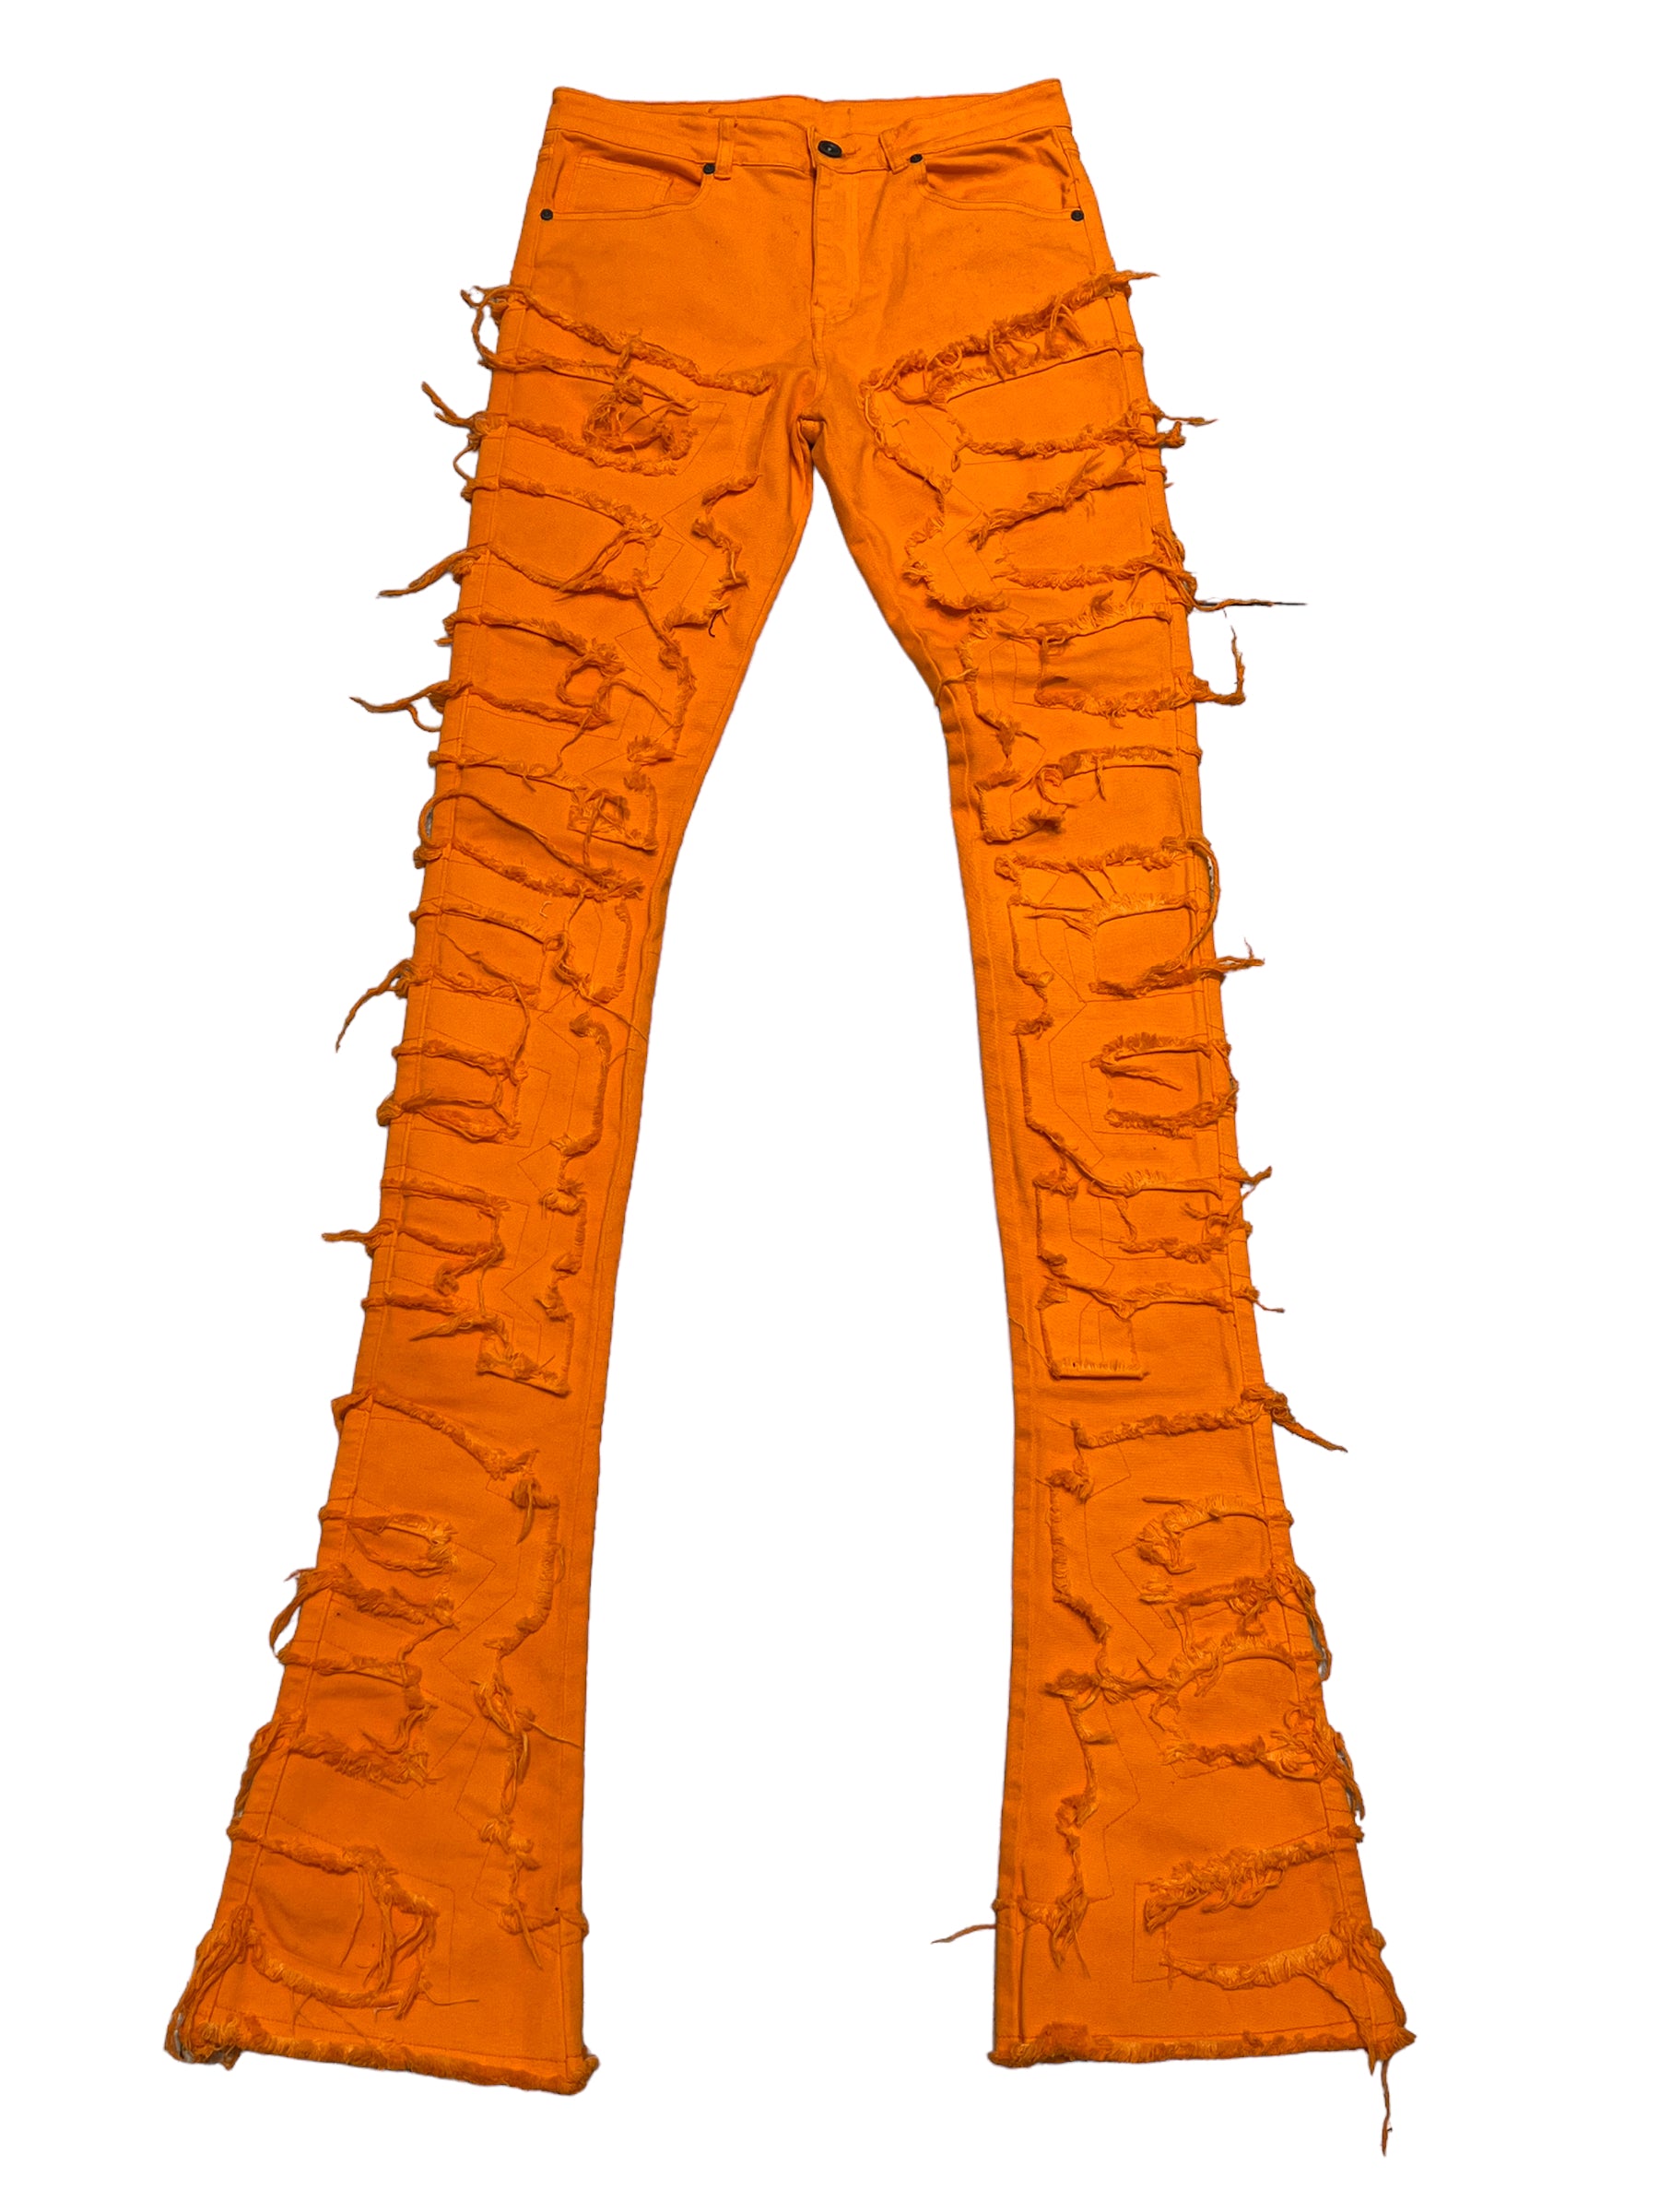 Dupri – Malik Stacked Orange Jeans Denim